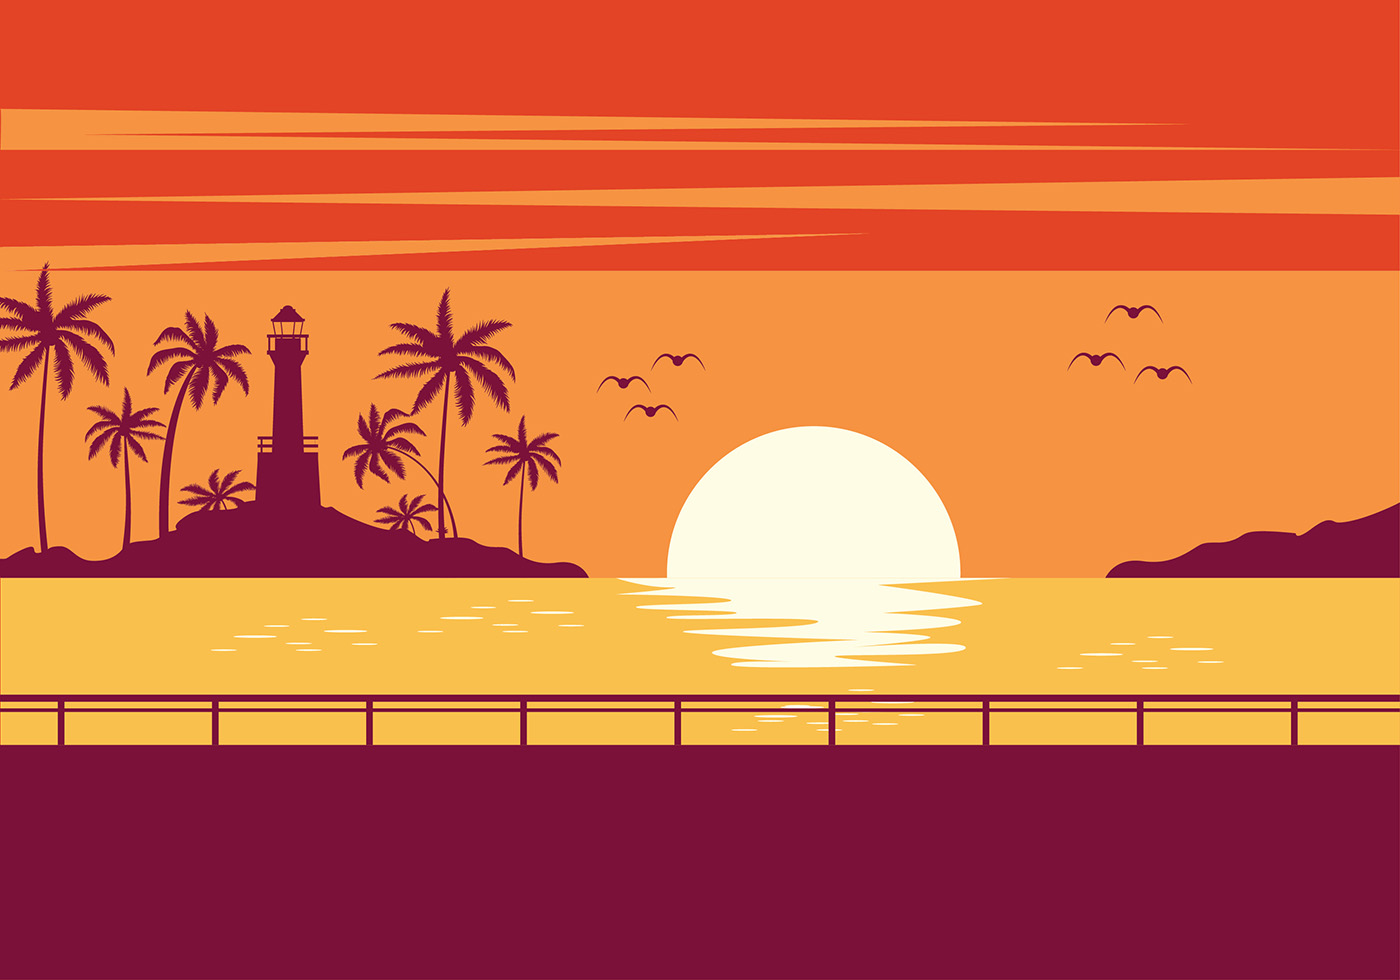 Sunset Free Vector Art - (8186 Free Downloads)